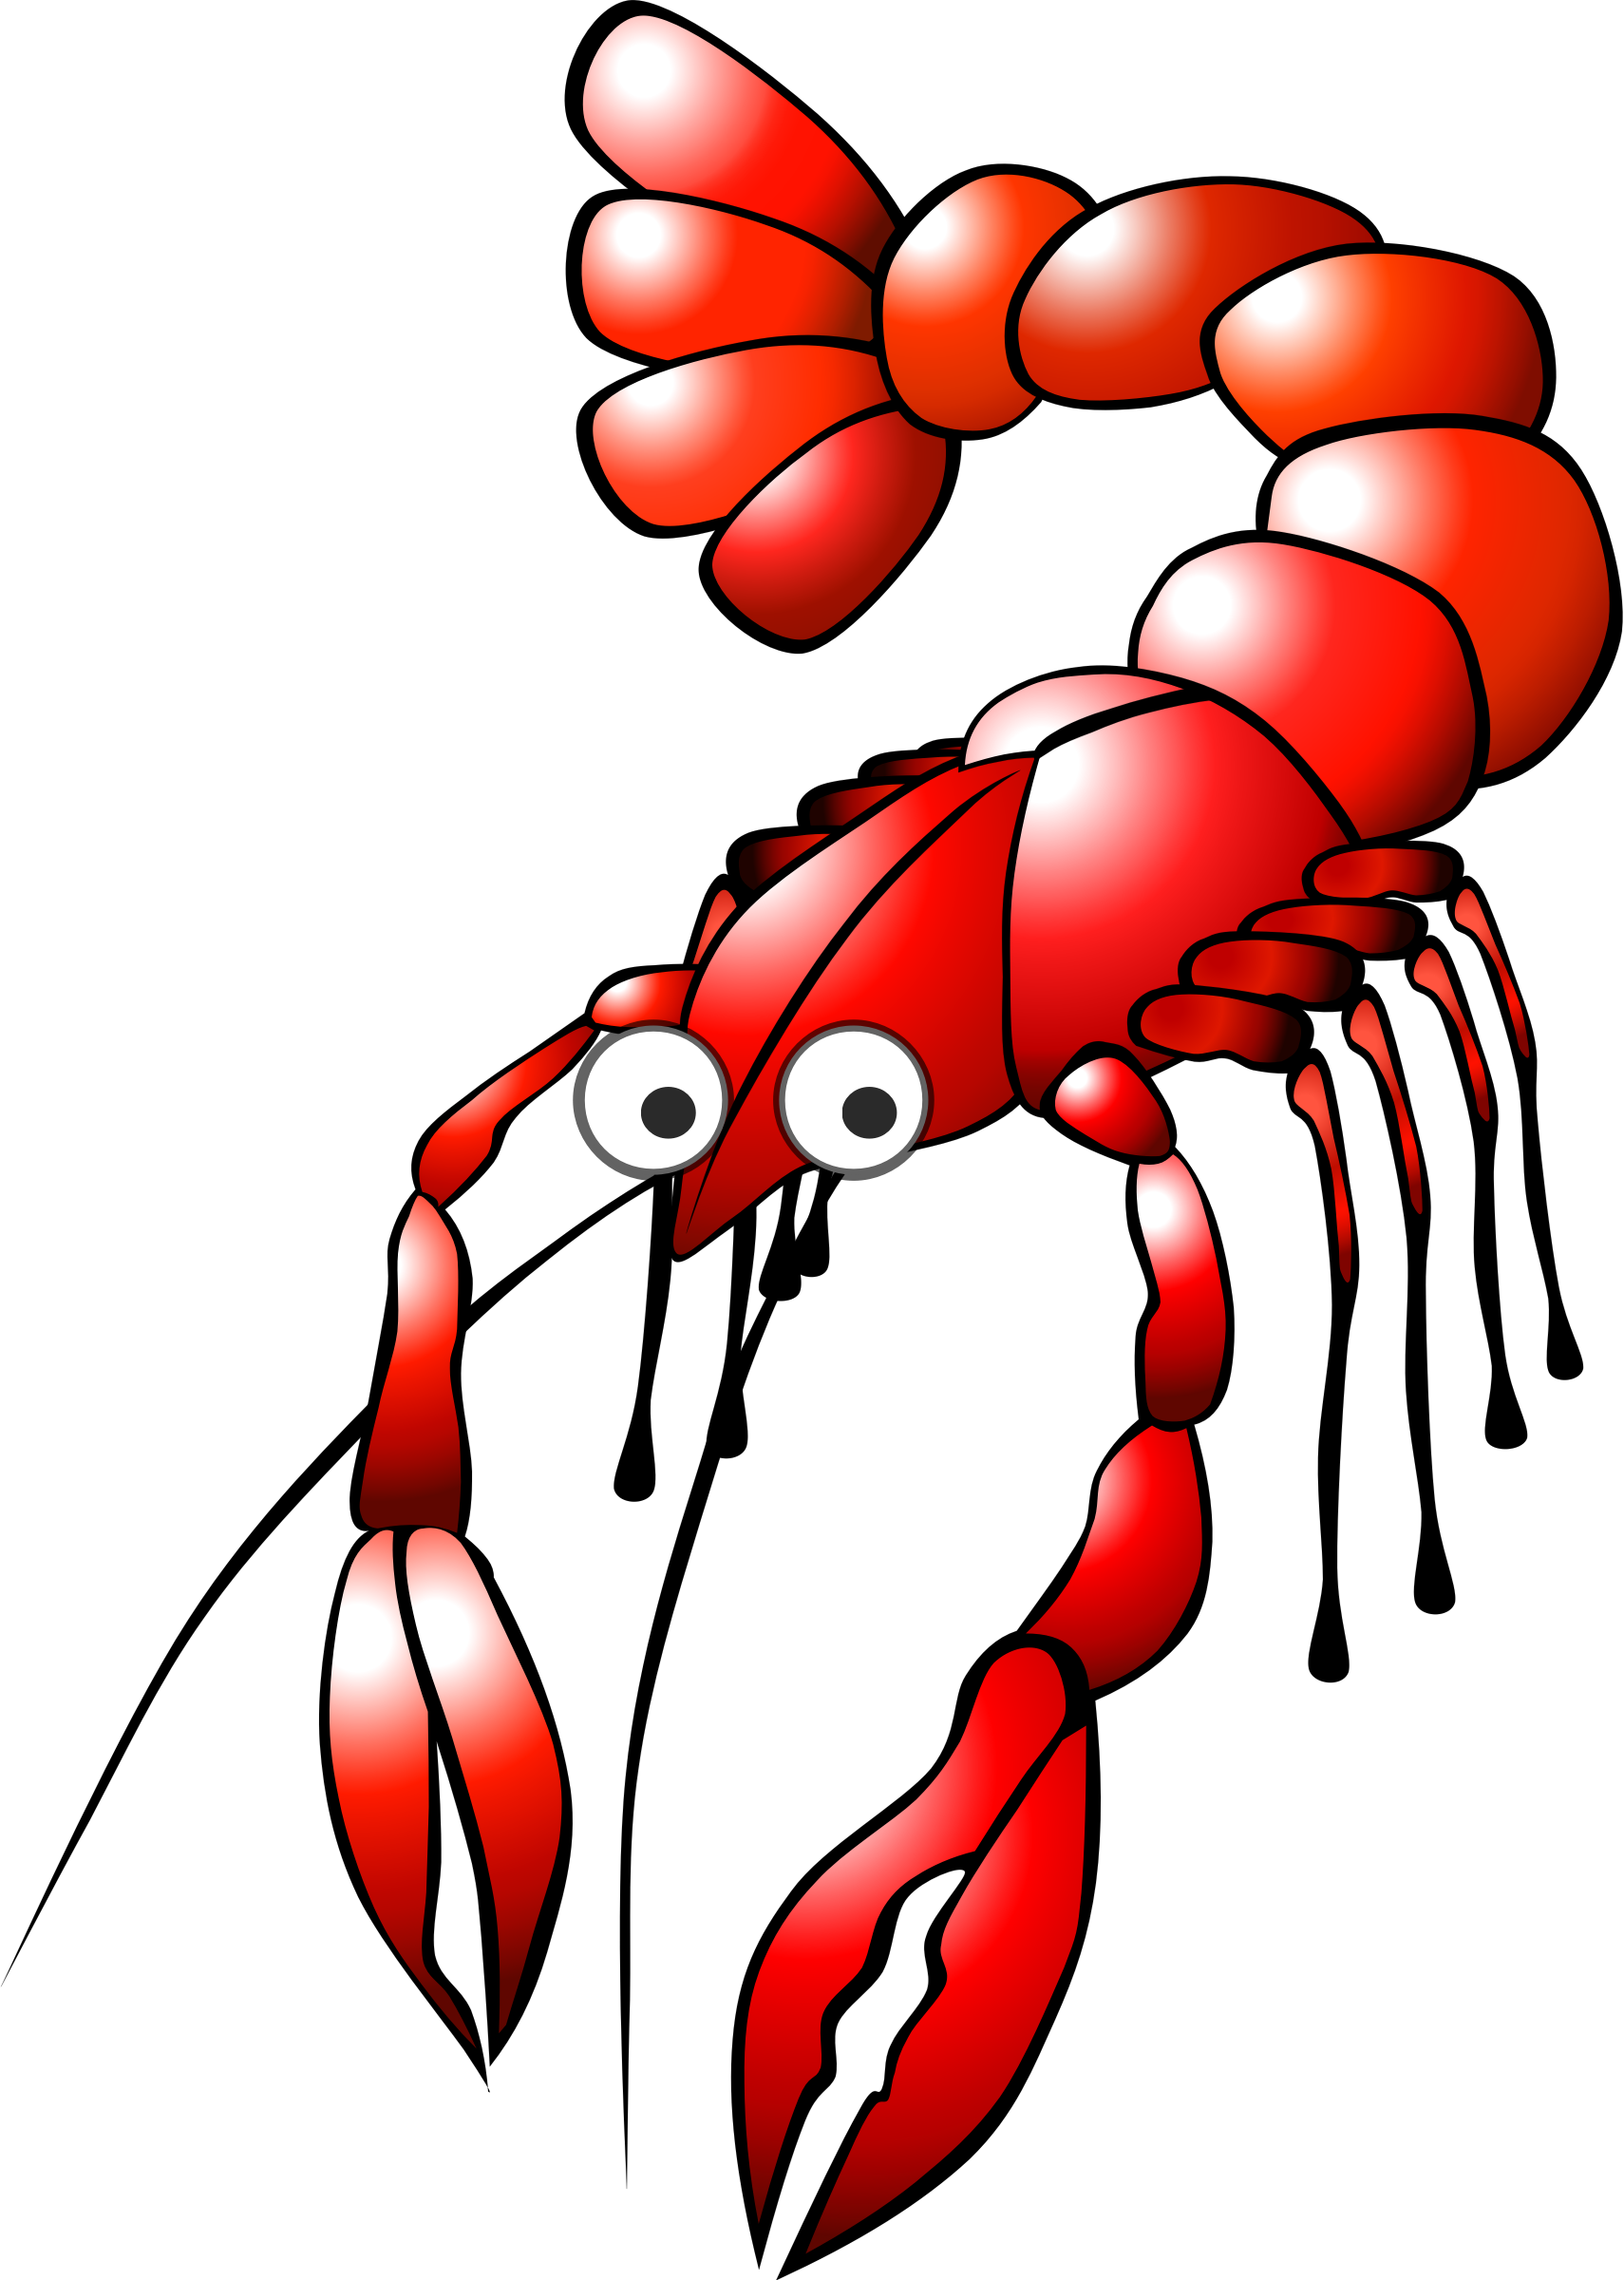 Red Cartoon Crayfish Illustration